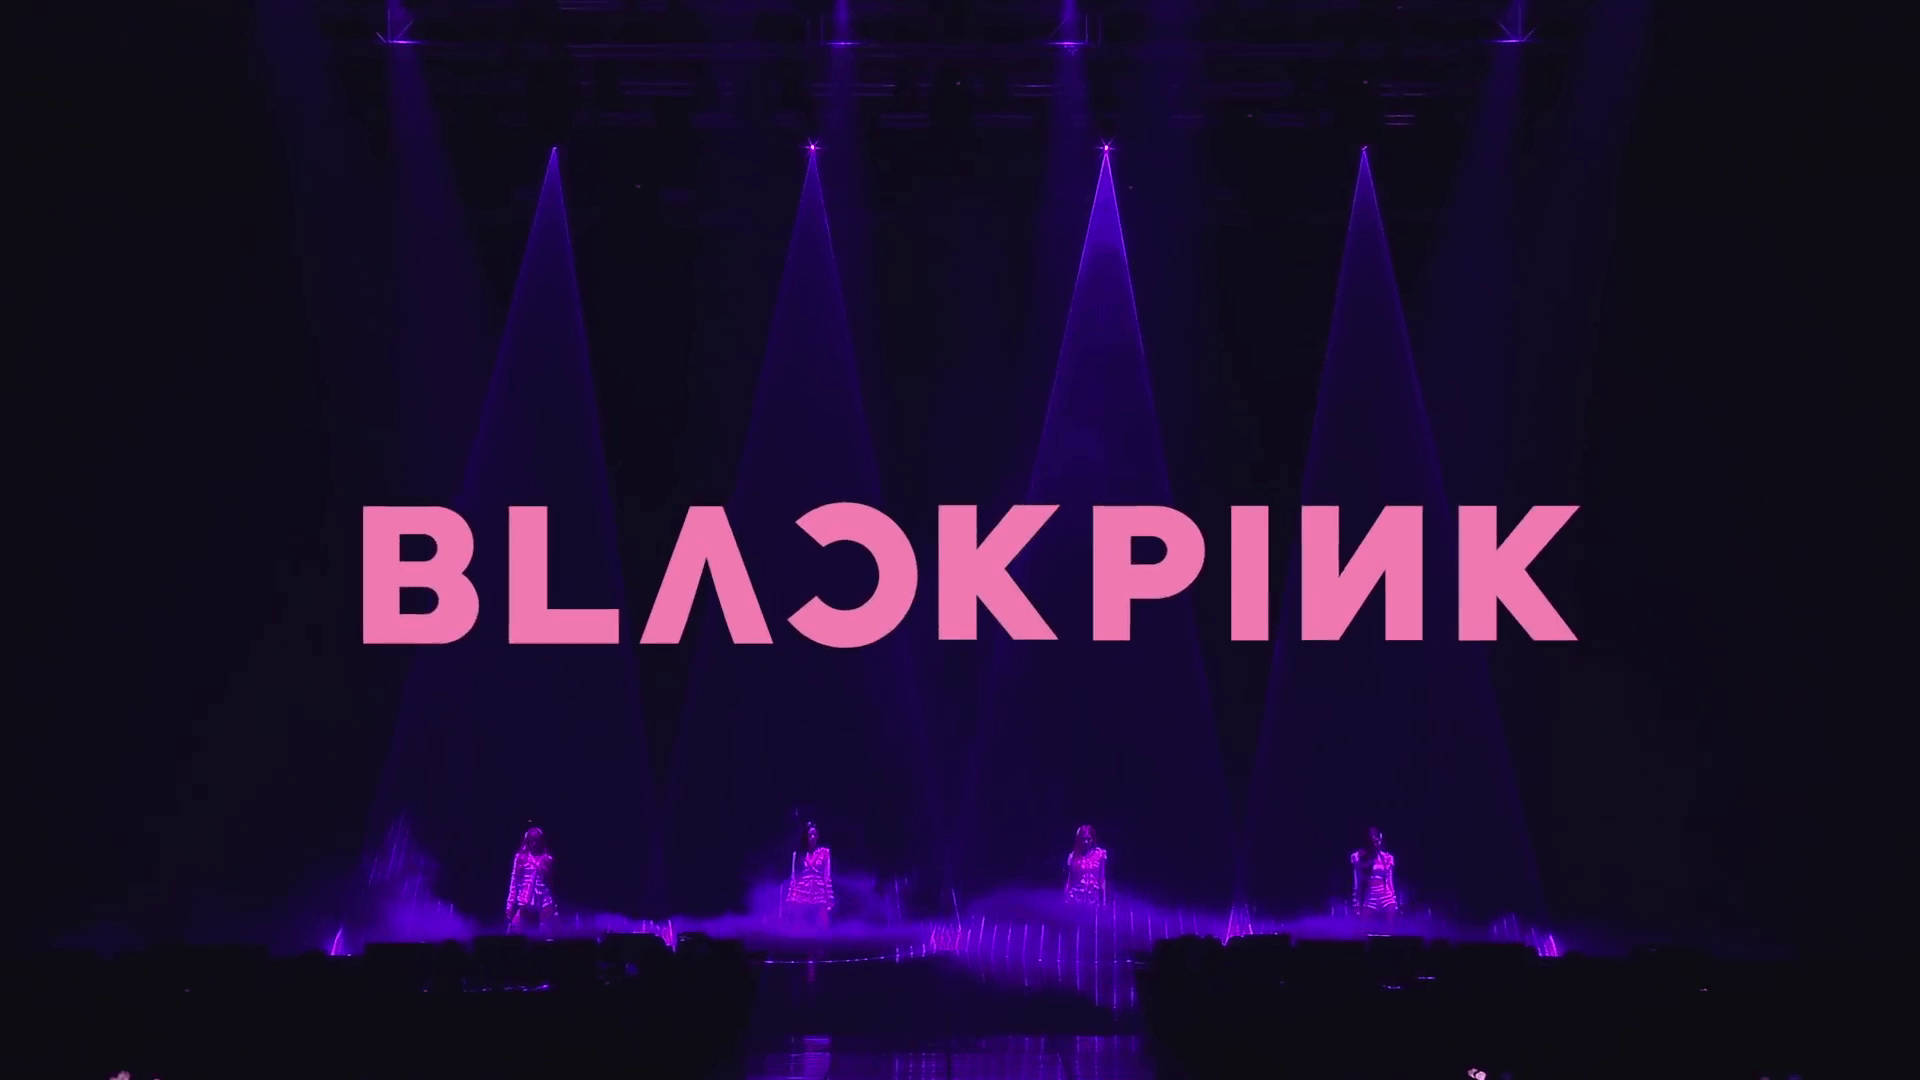 Download Blackpink On The Concert Stage Wallpaper | Wallpapers.com